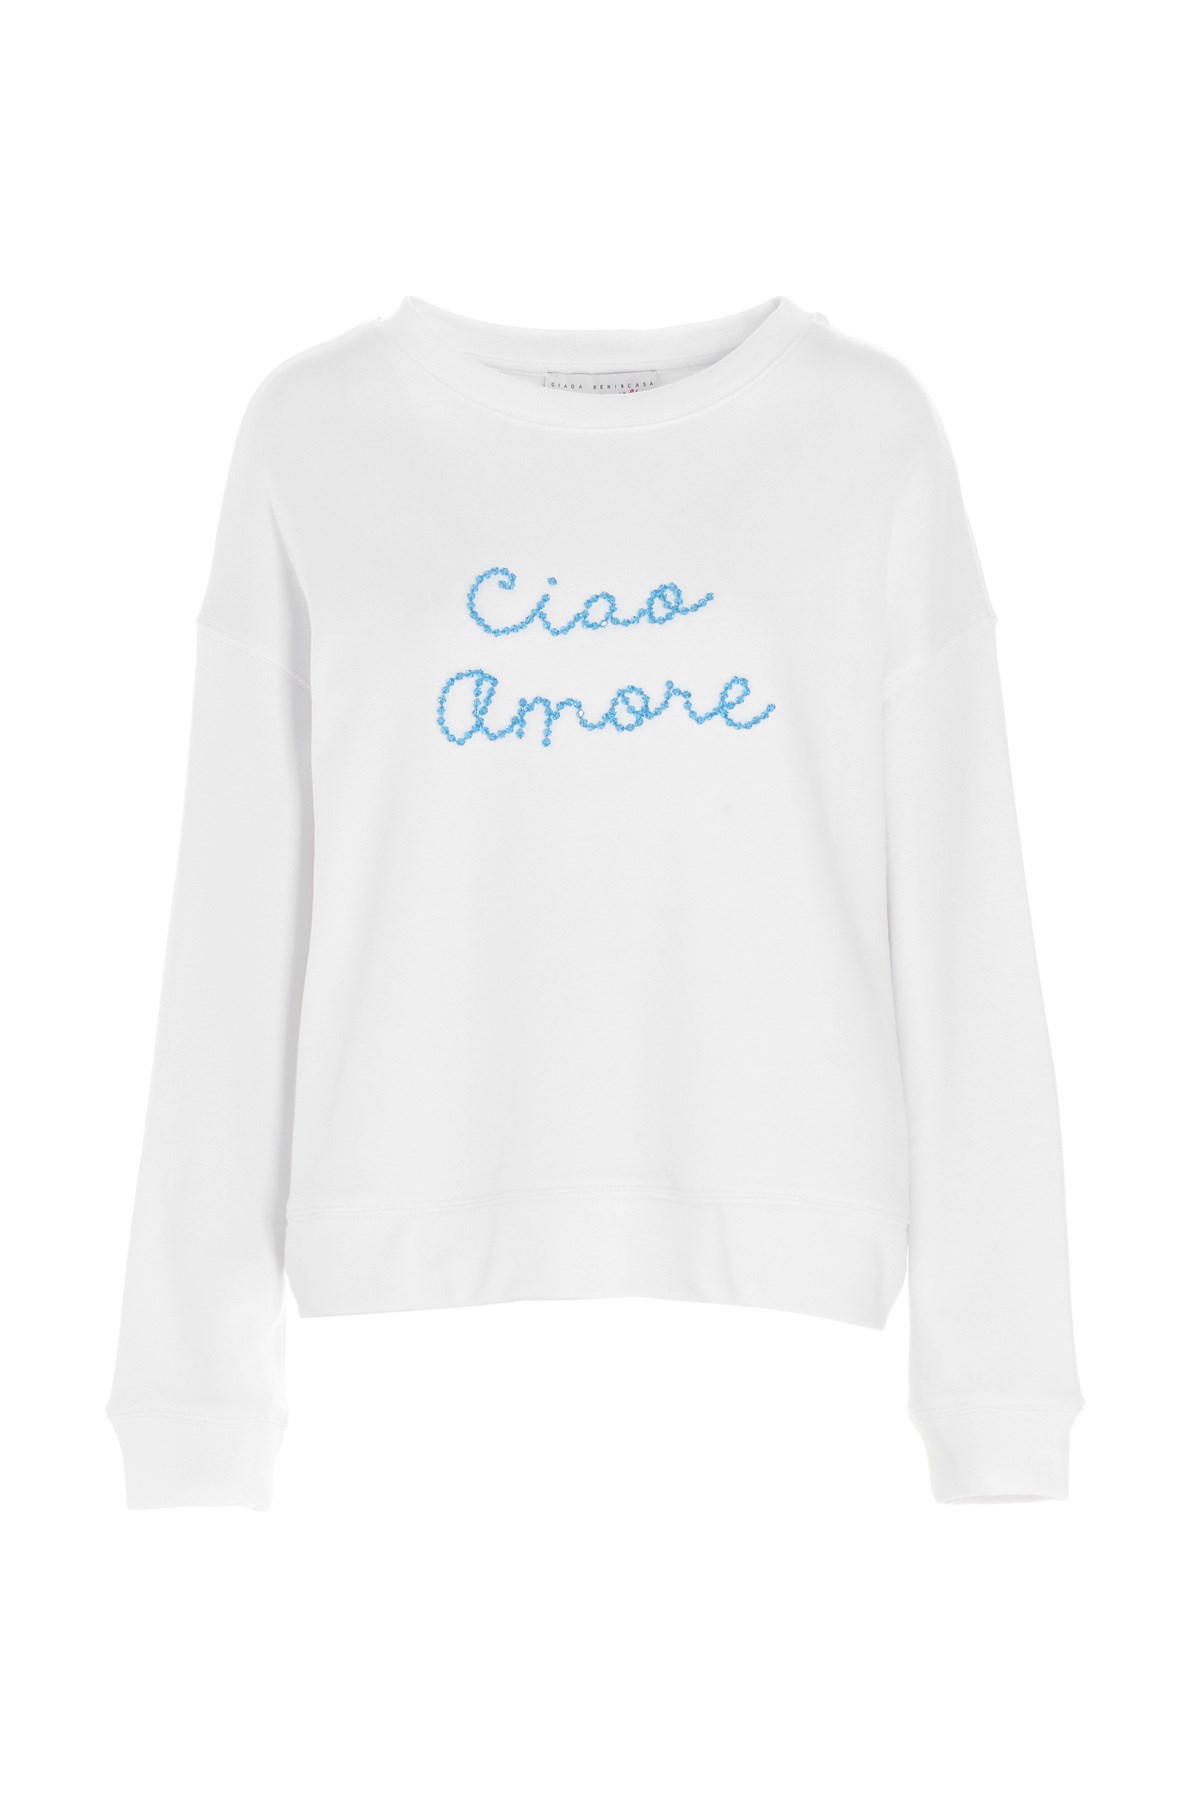 GIADA BENINCASA 'Ciao Amore’ Sweatshirt